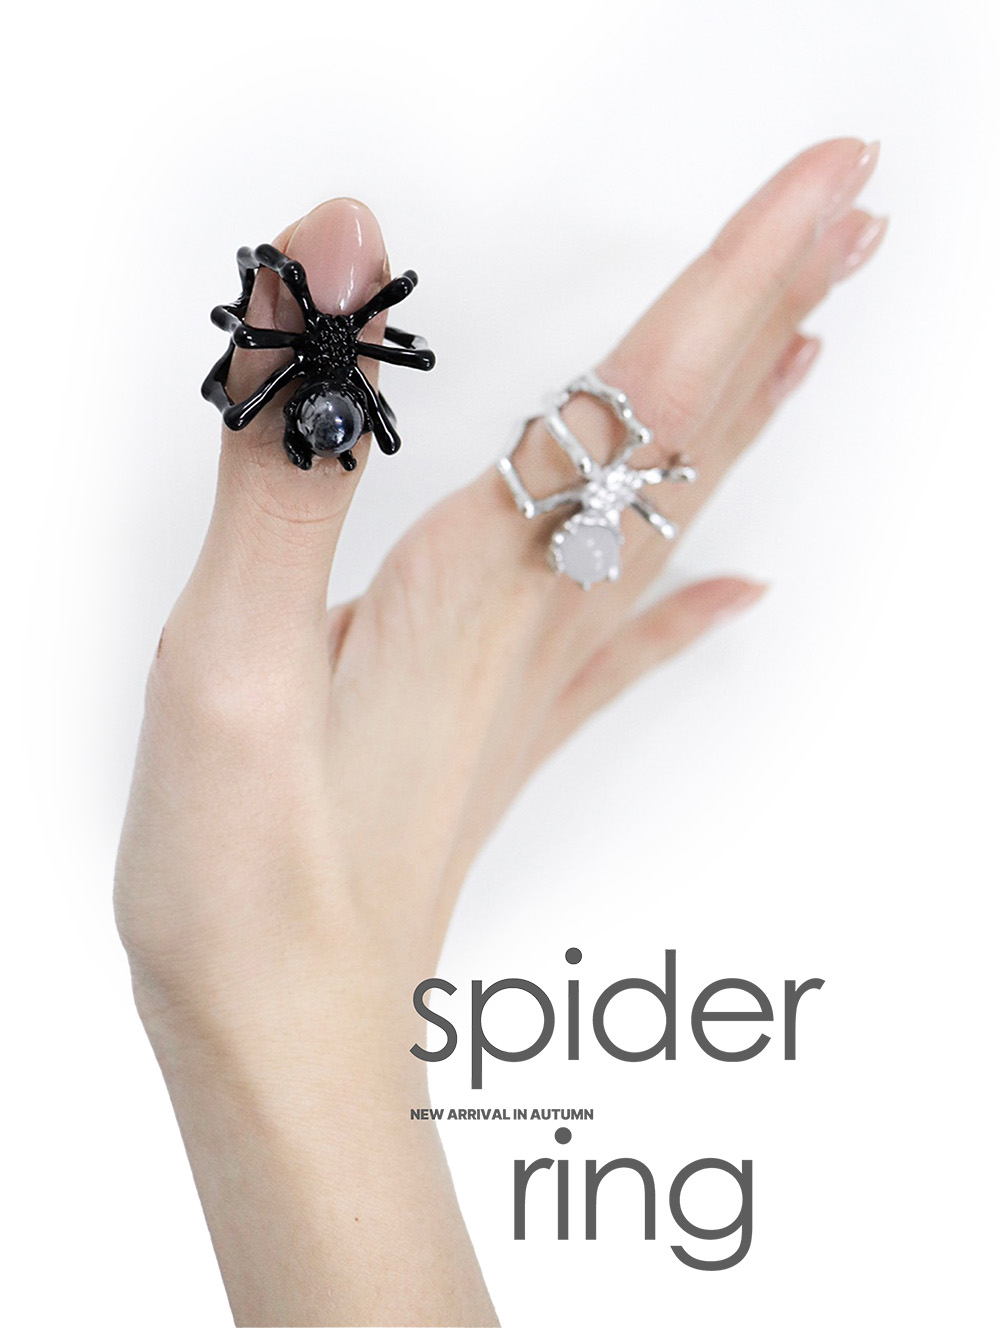 Spider ring